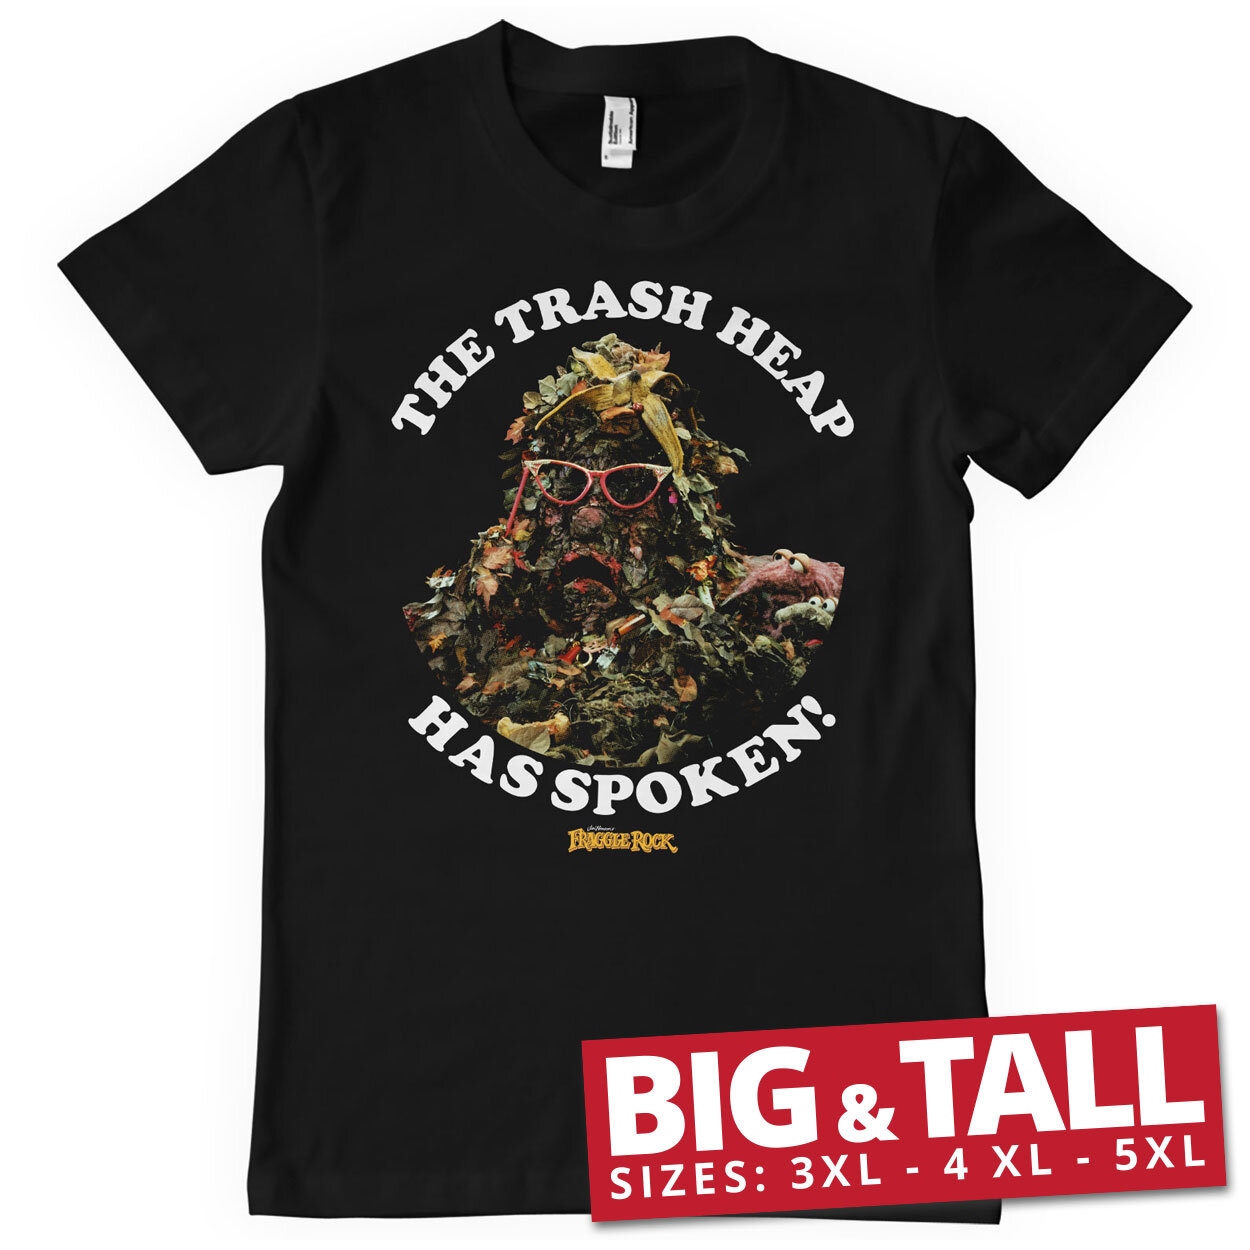 The Trash Heap Has Spoken Big & Tall T-Shirt